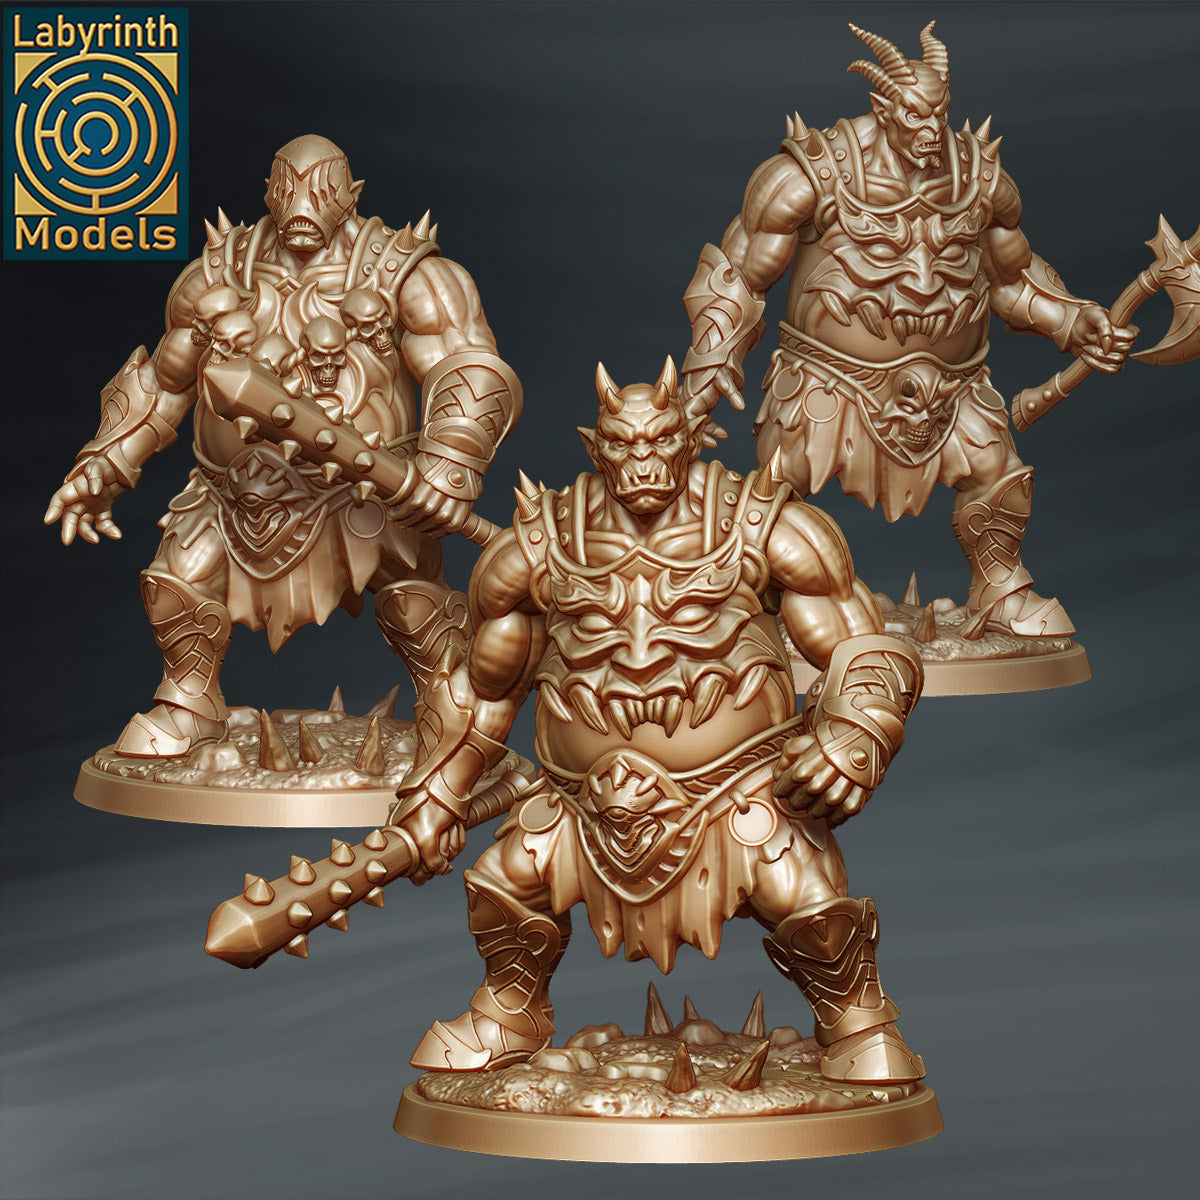 Ogres by Labyrinth Models